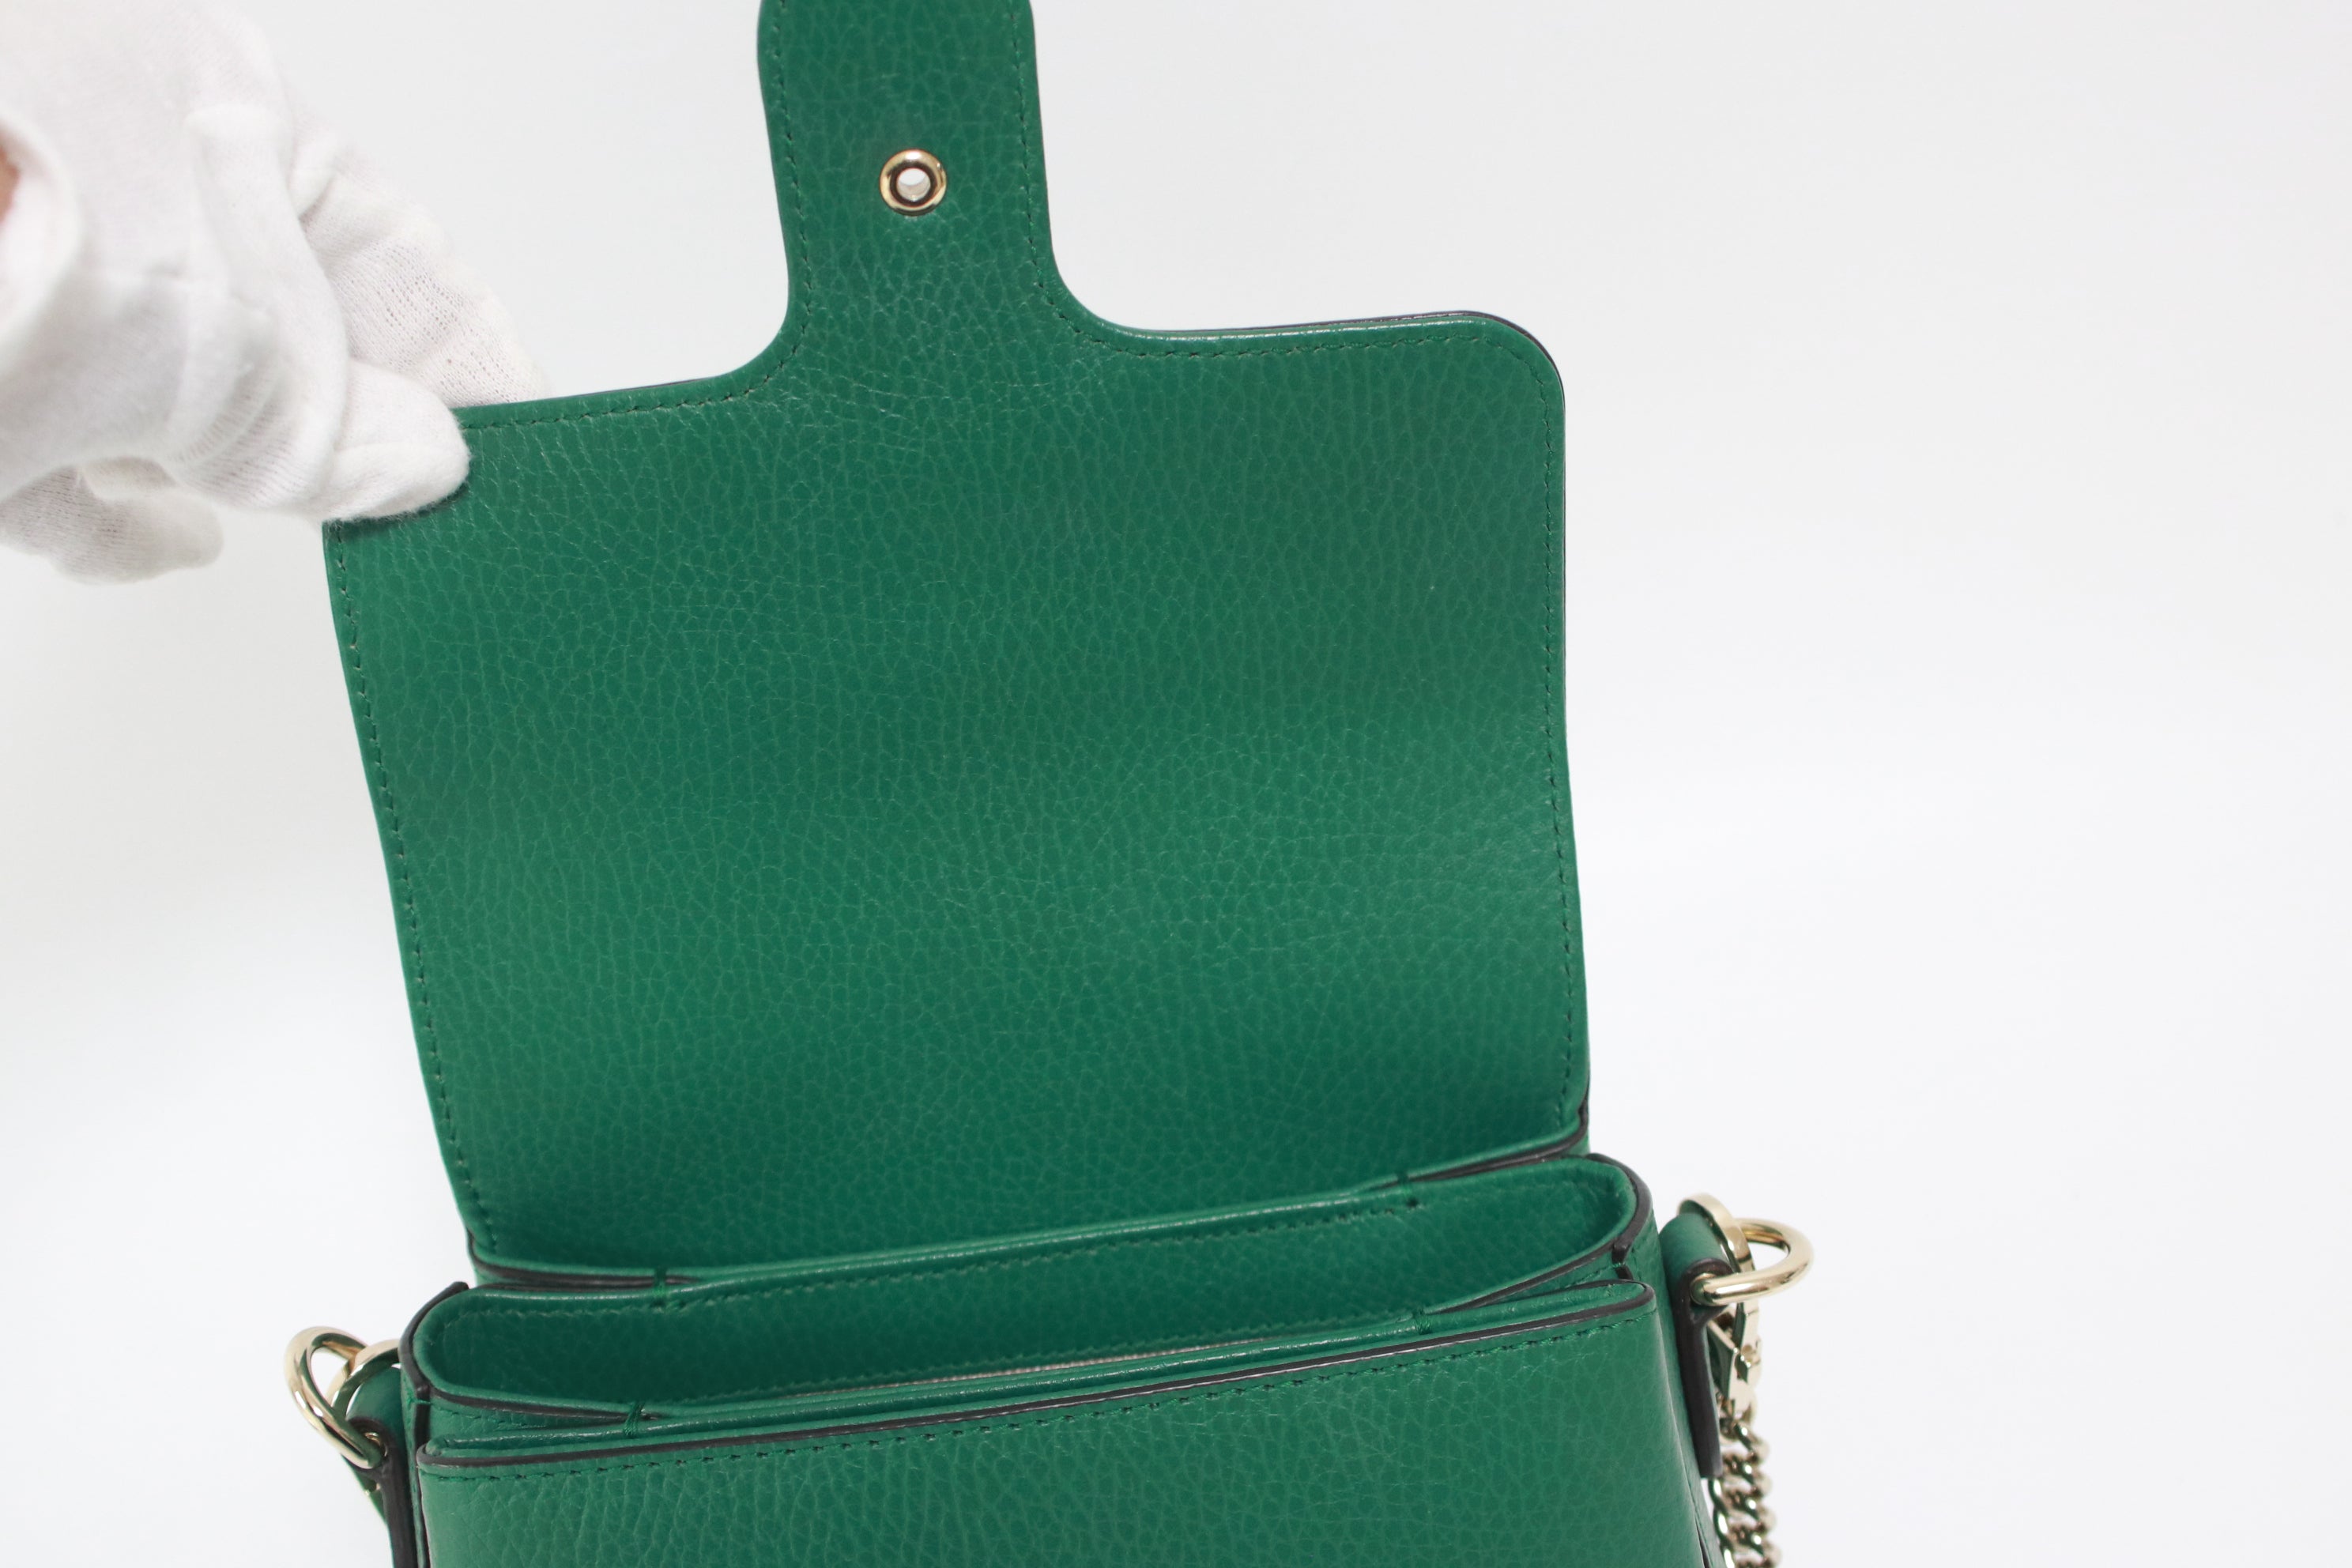 Gucci Interlocking Green Shoulder Bag Used (5828)